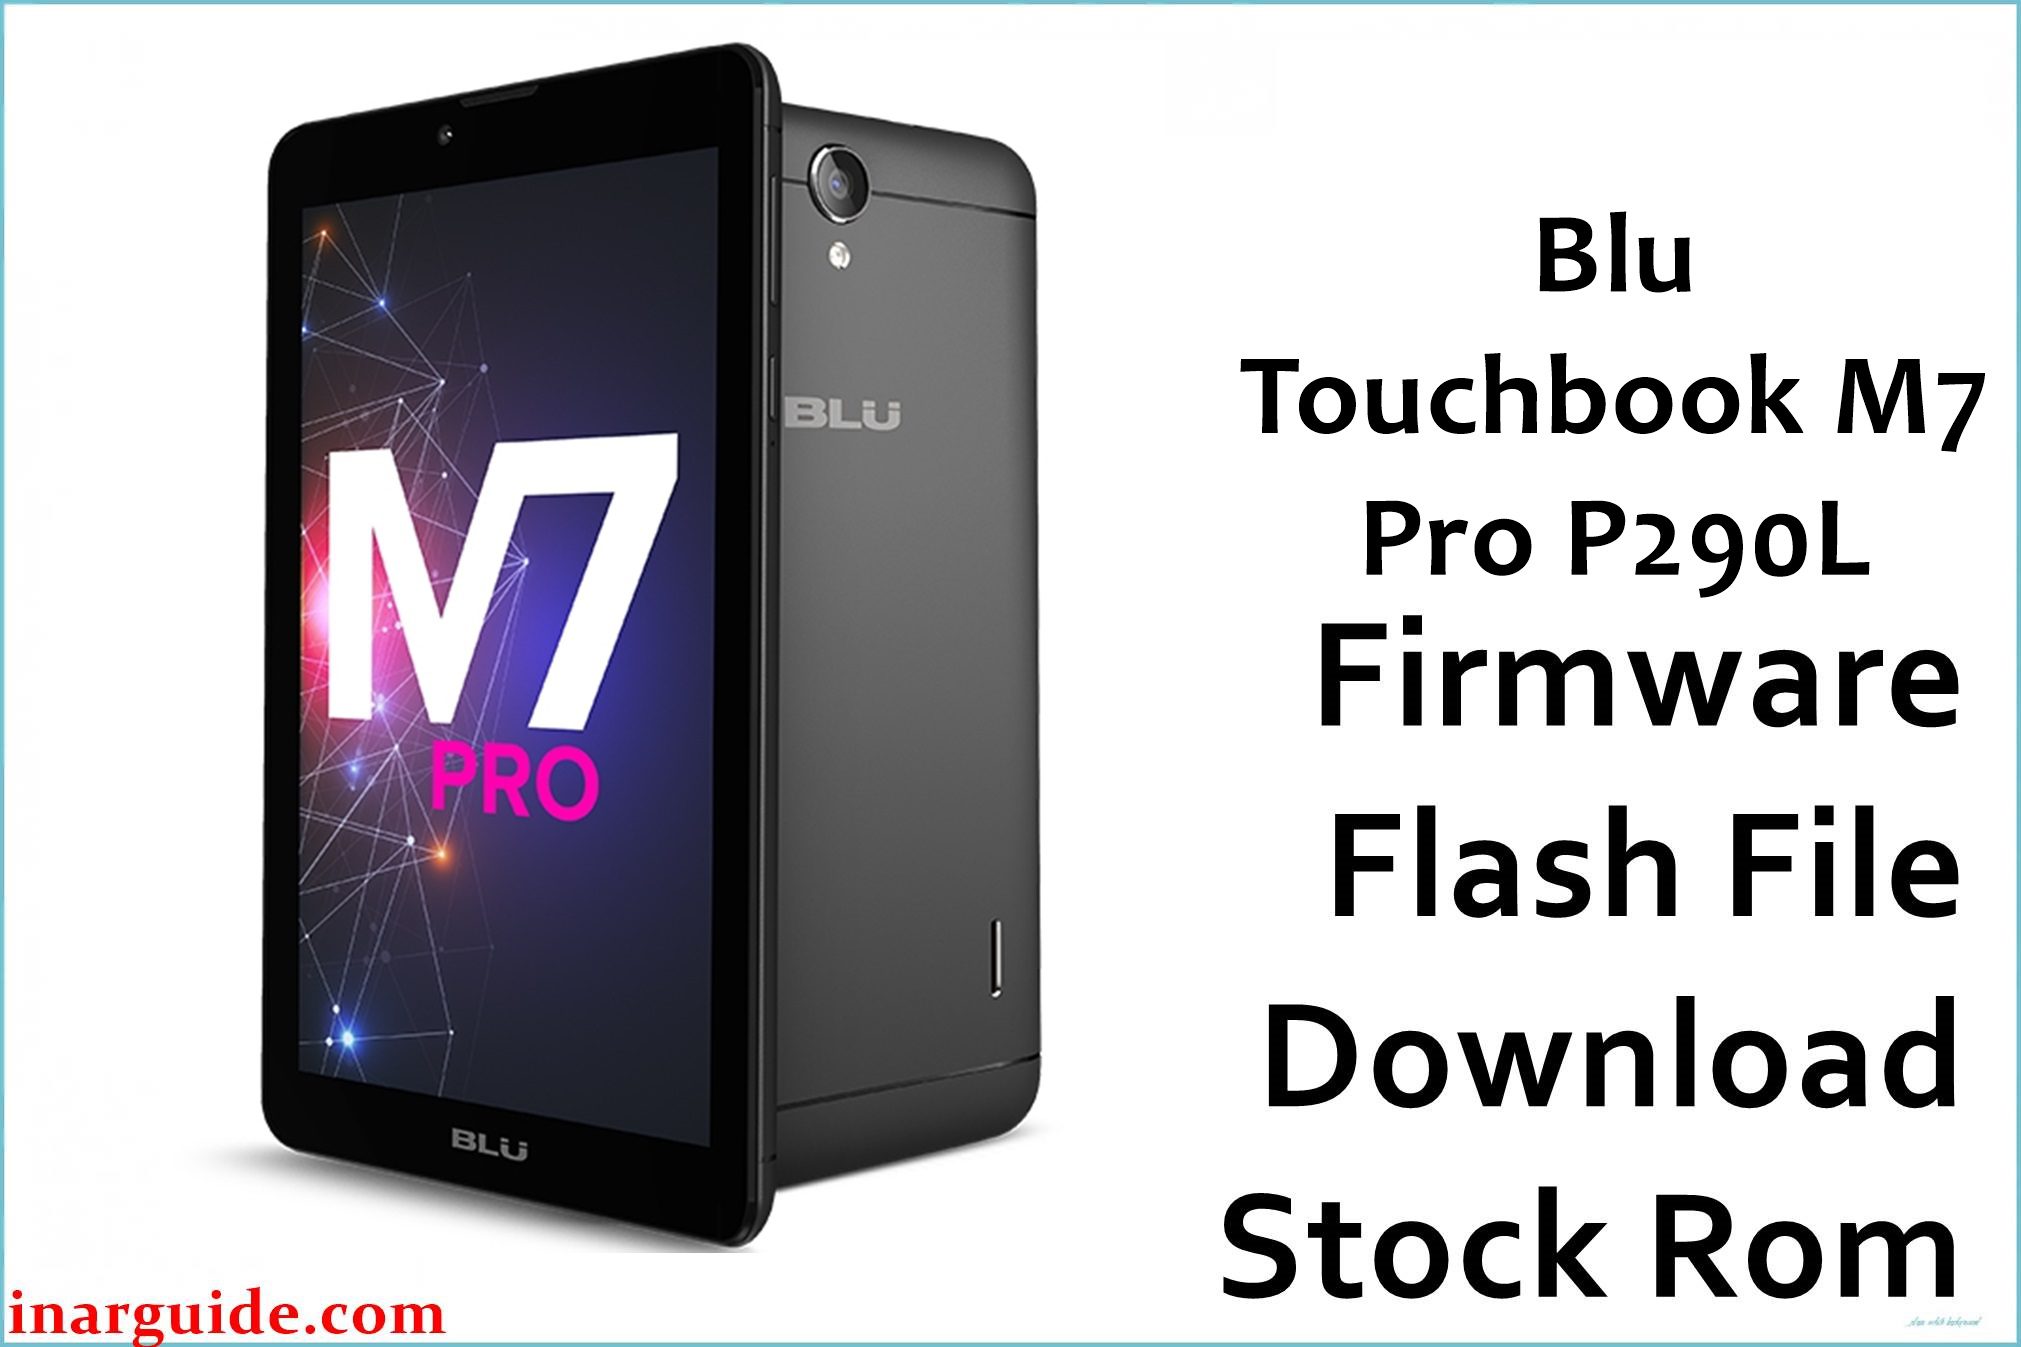 Blu Touchbook M7 Pro P290L